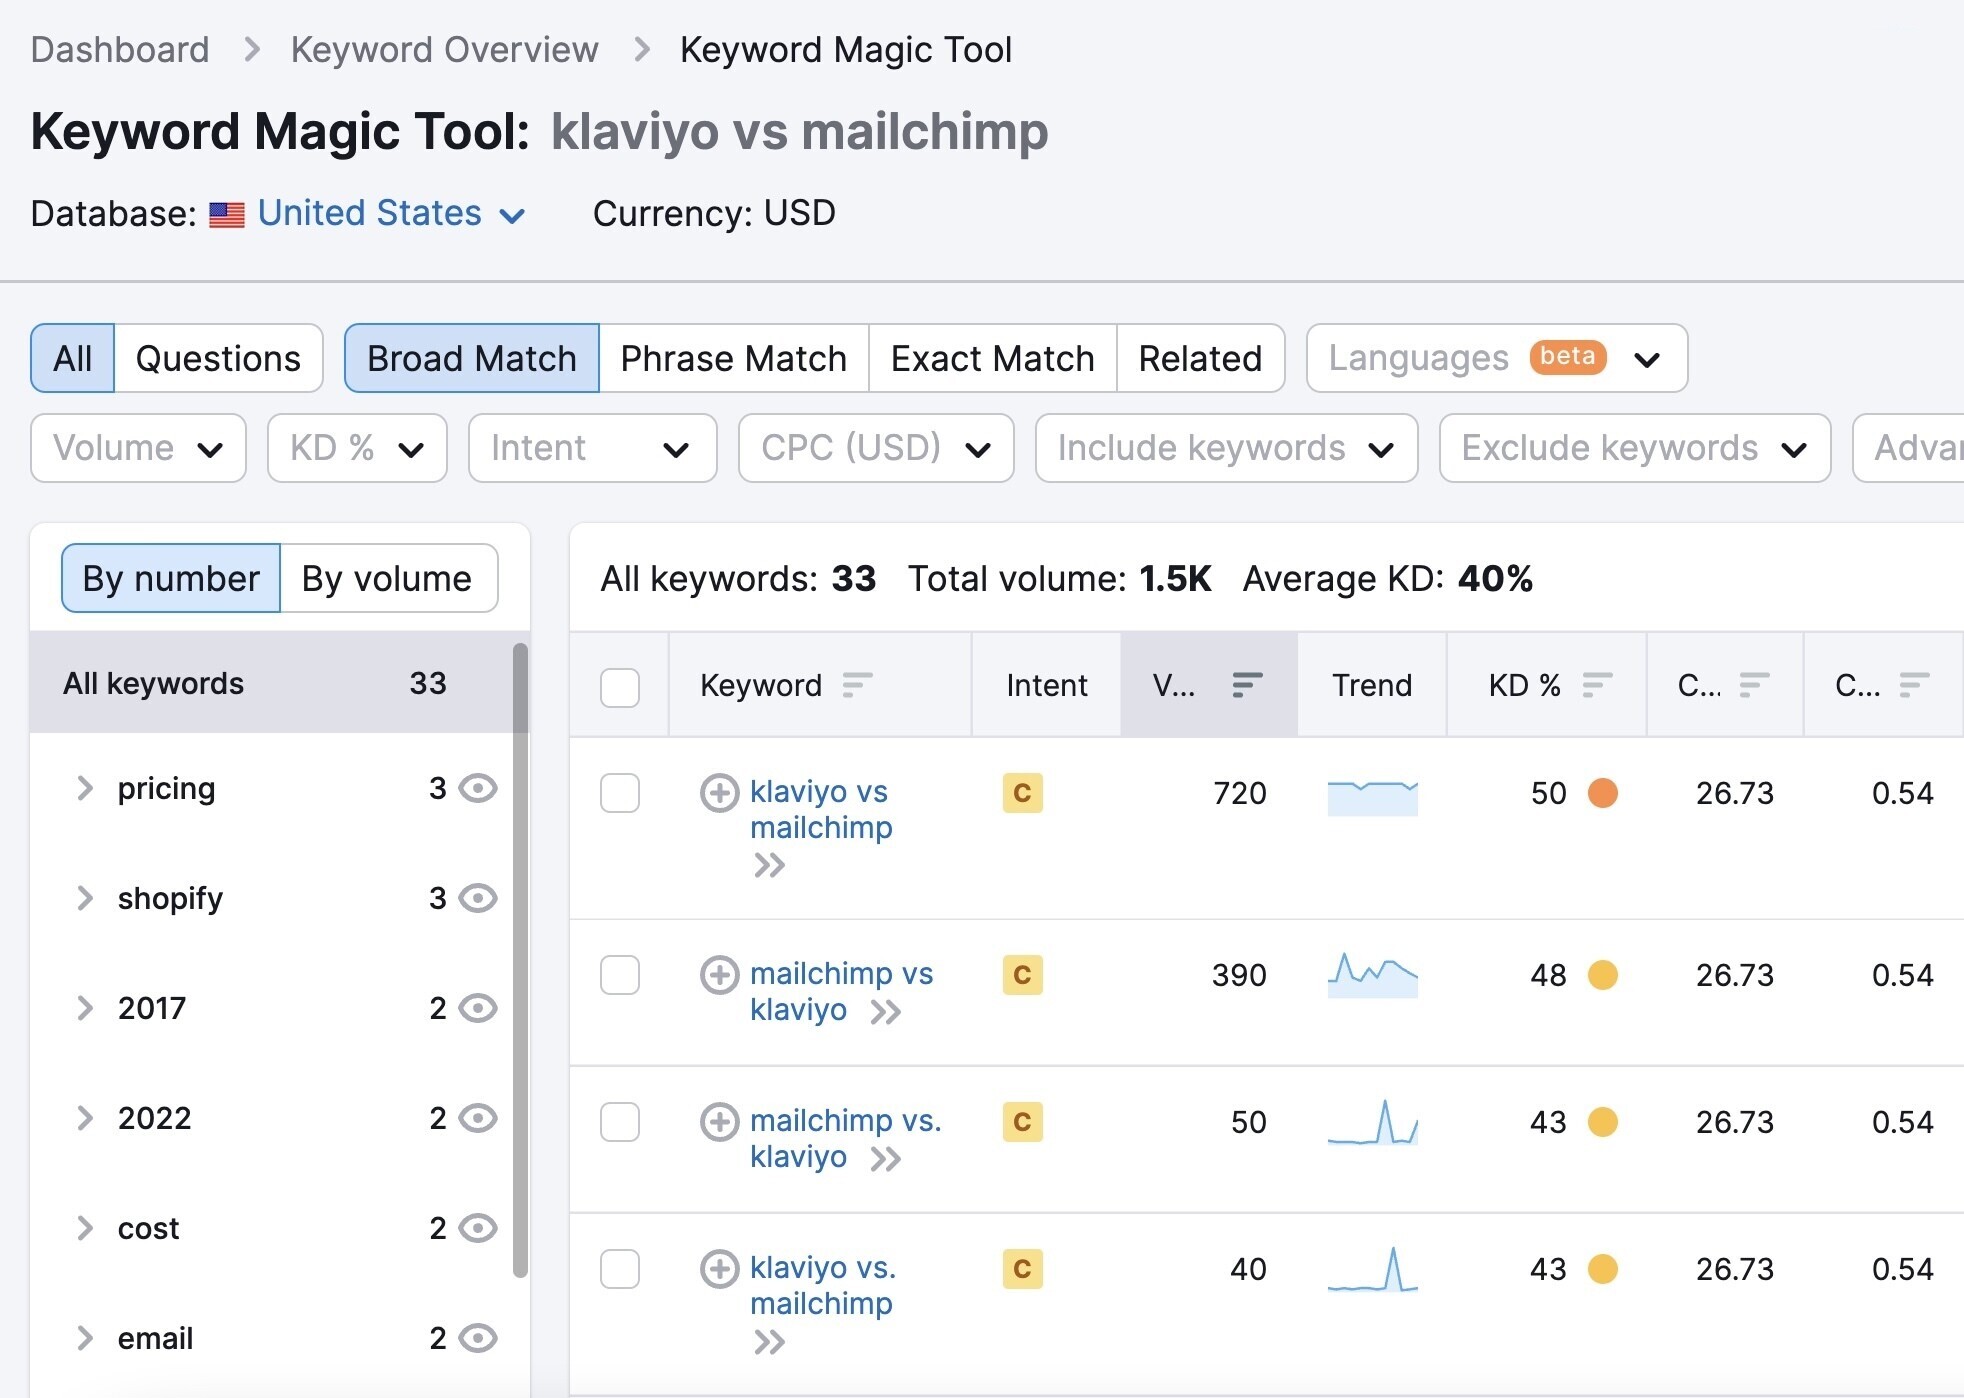 Keyword Magic Tool results for "Klaviyo vs mailchimp"